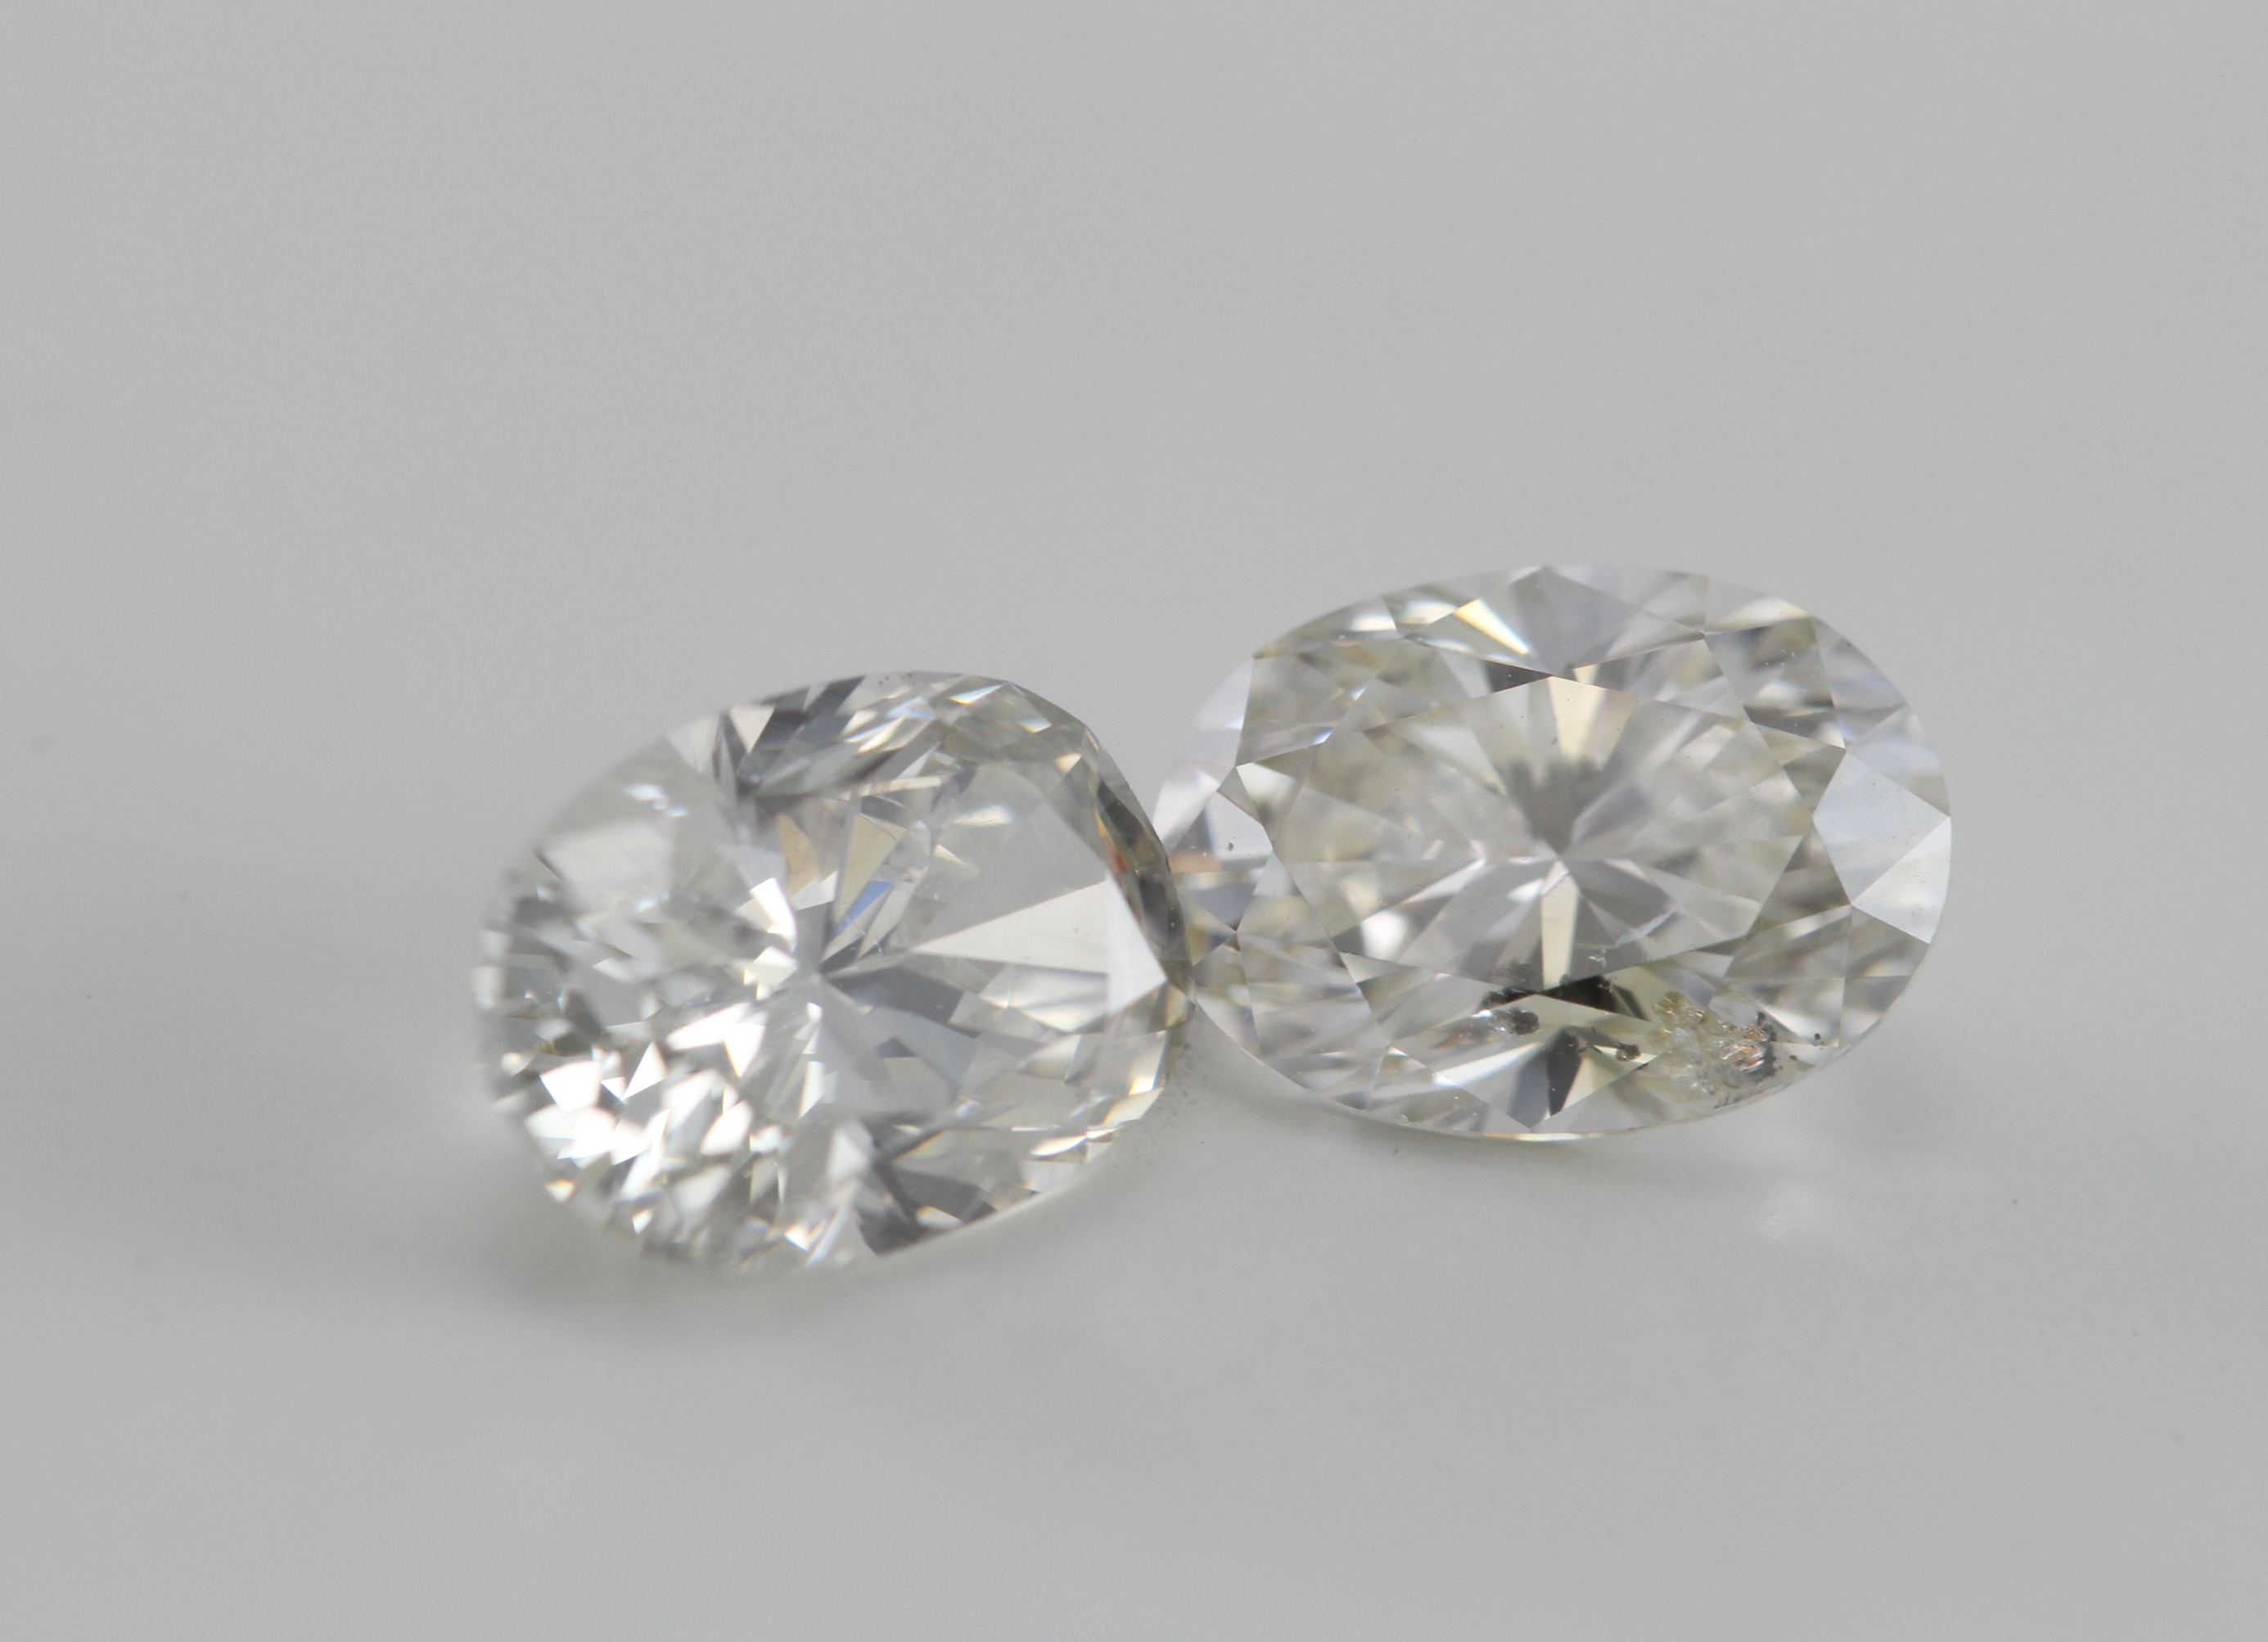 A Pair of Oval Cut Loose Diamonds (2.09 Ct, J ,I1) | eBay